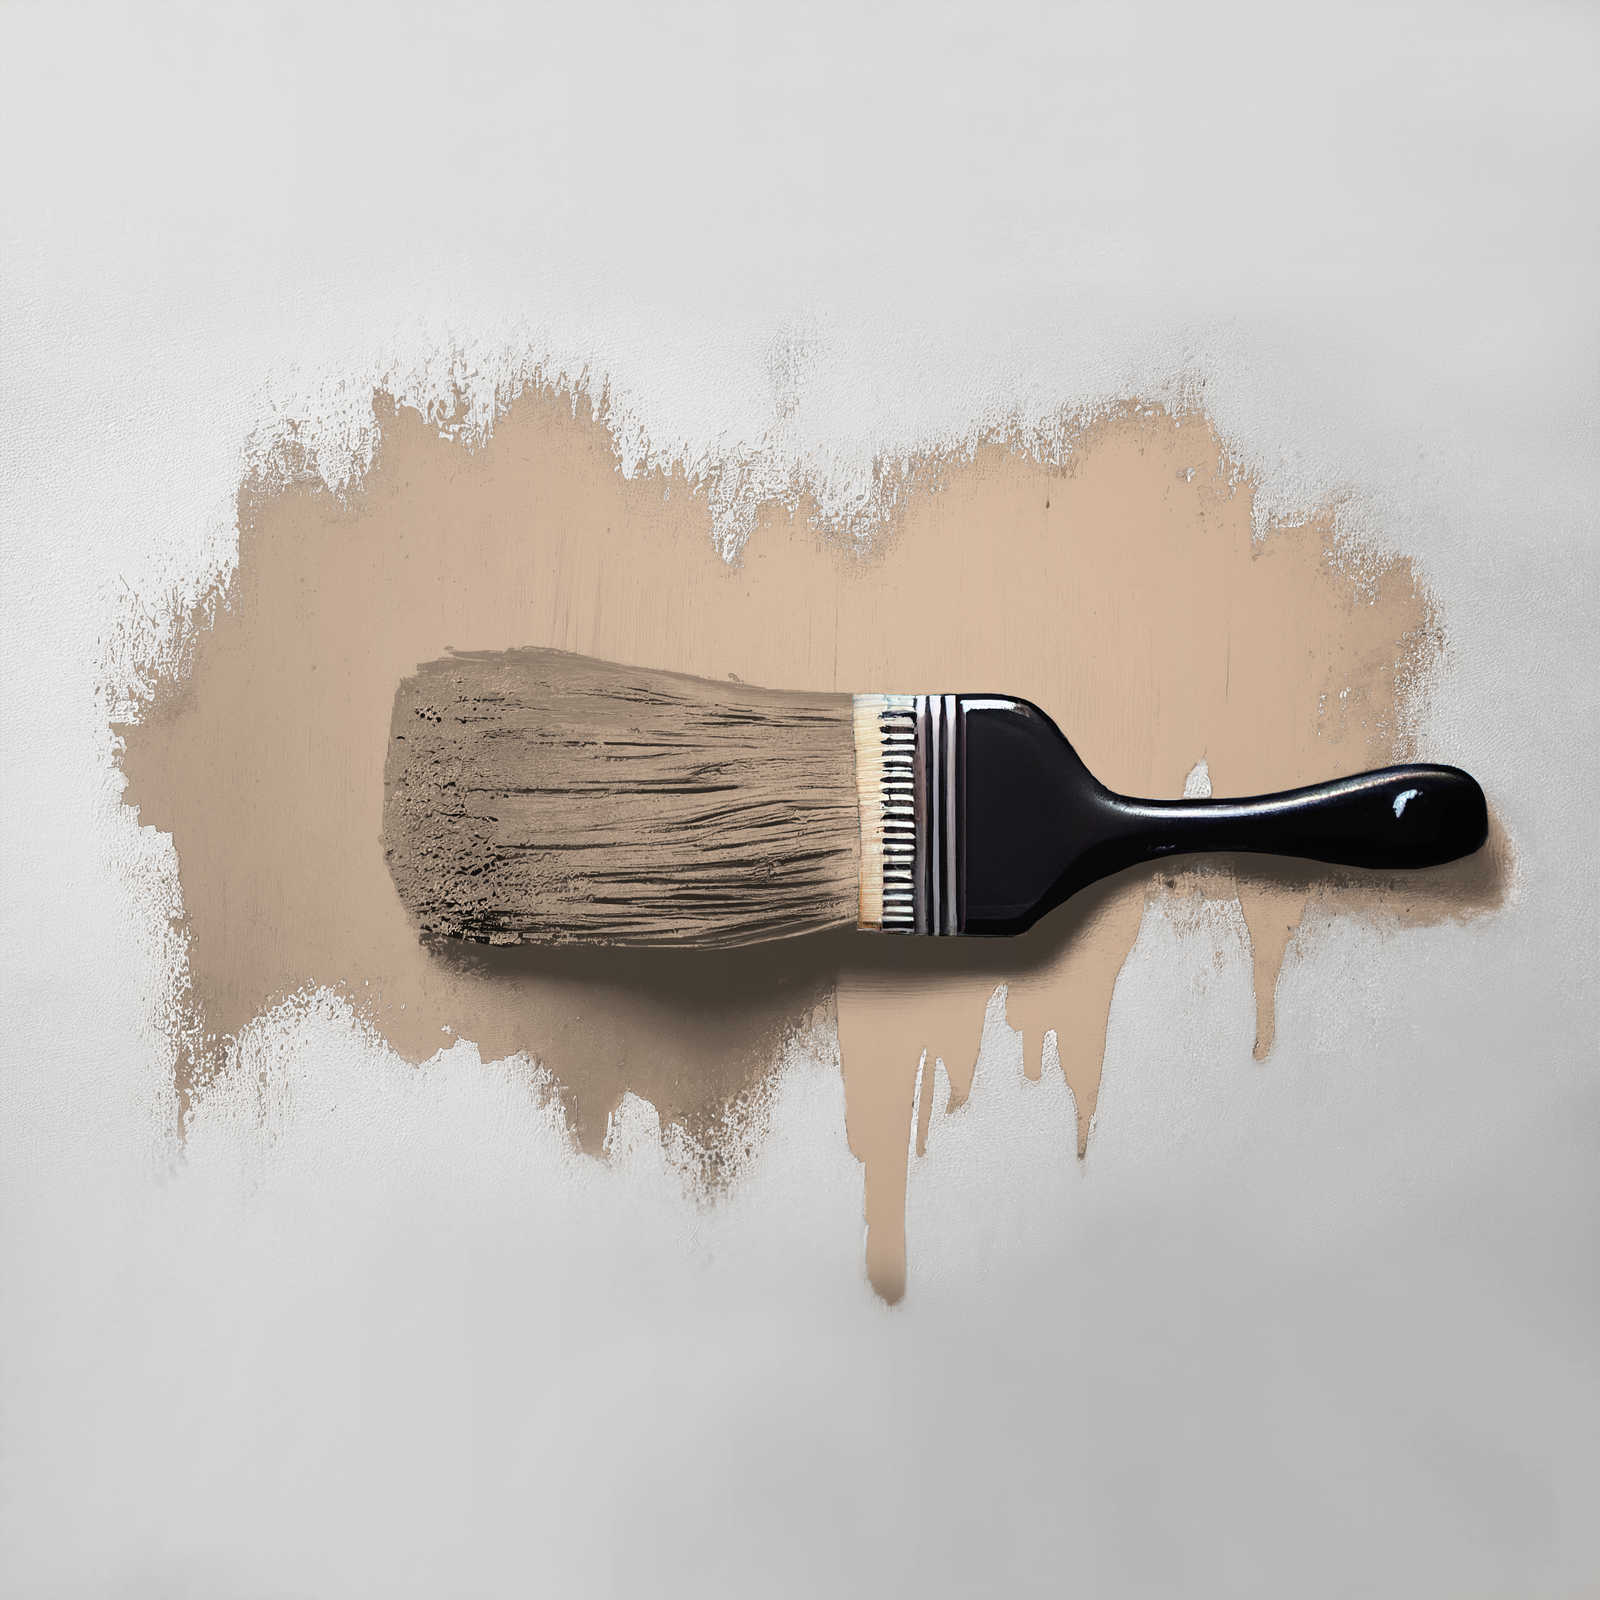             Wall Paint TCK6010 »Latte Macchhiato« in natural beige – 2.5 litre
        